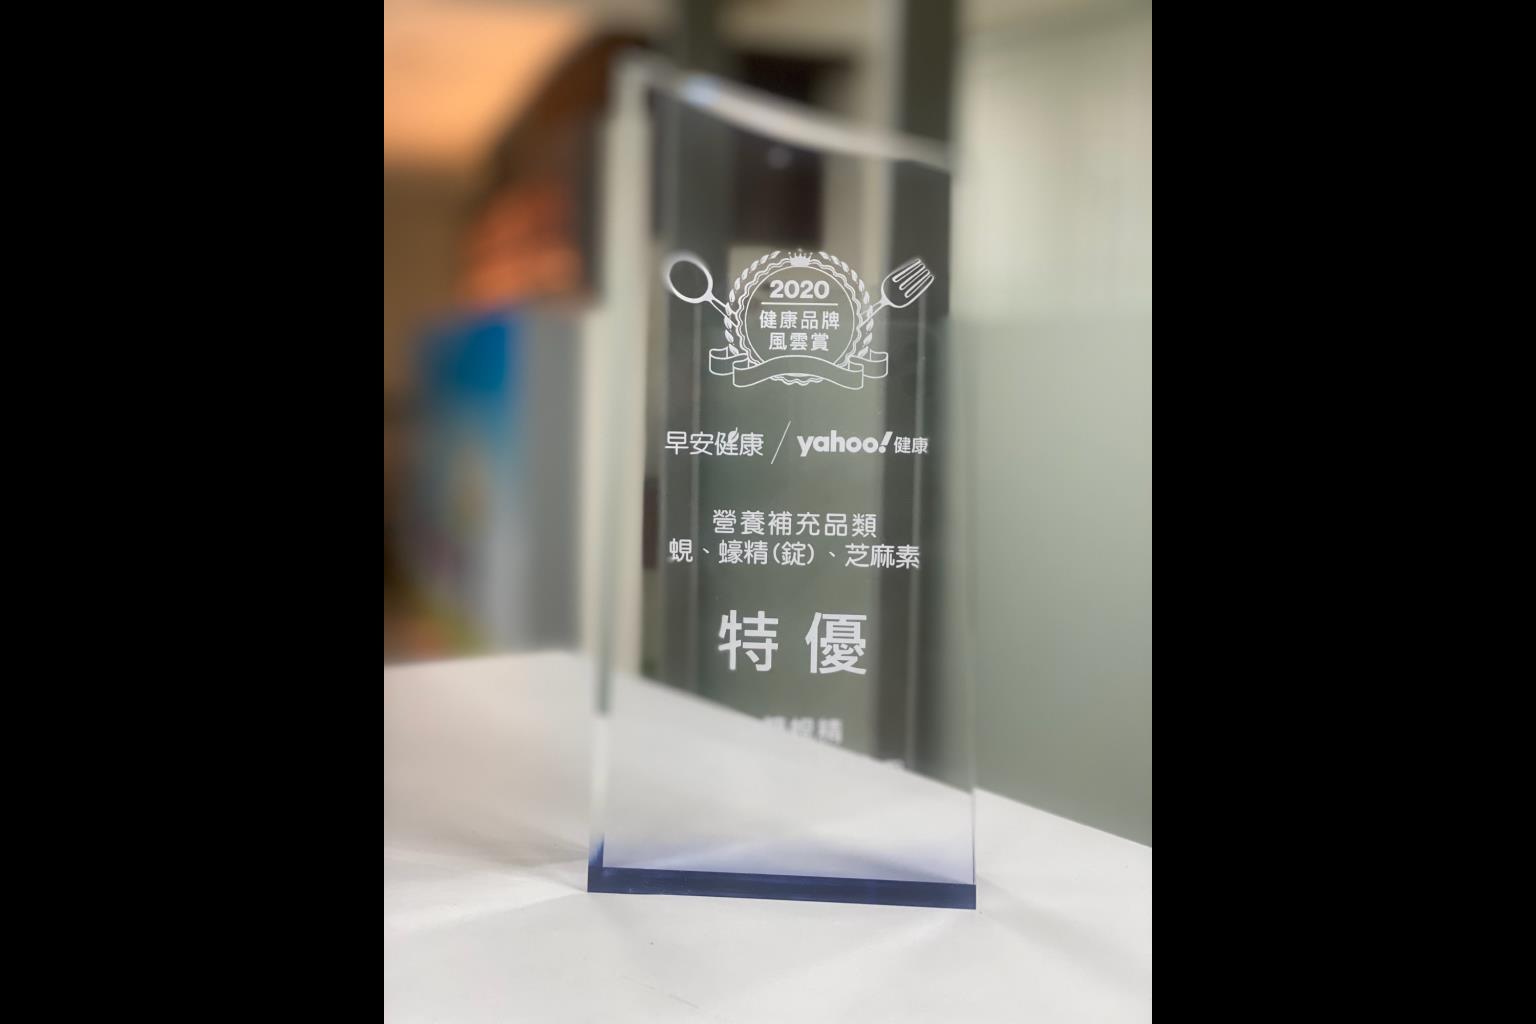 Taisugar’s Clam Essence was awarded the Merit Award in 2020 Health Brand Award.